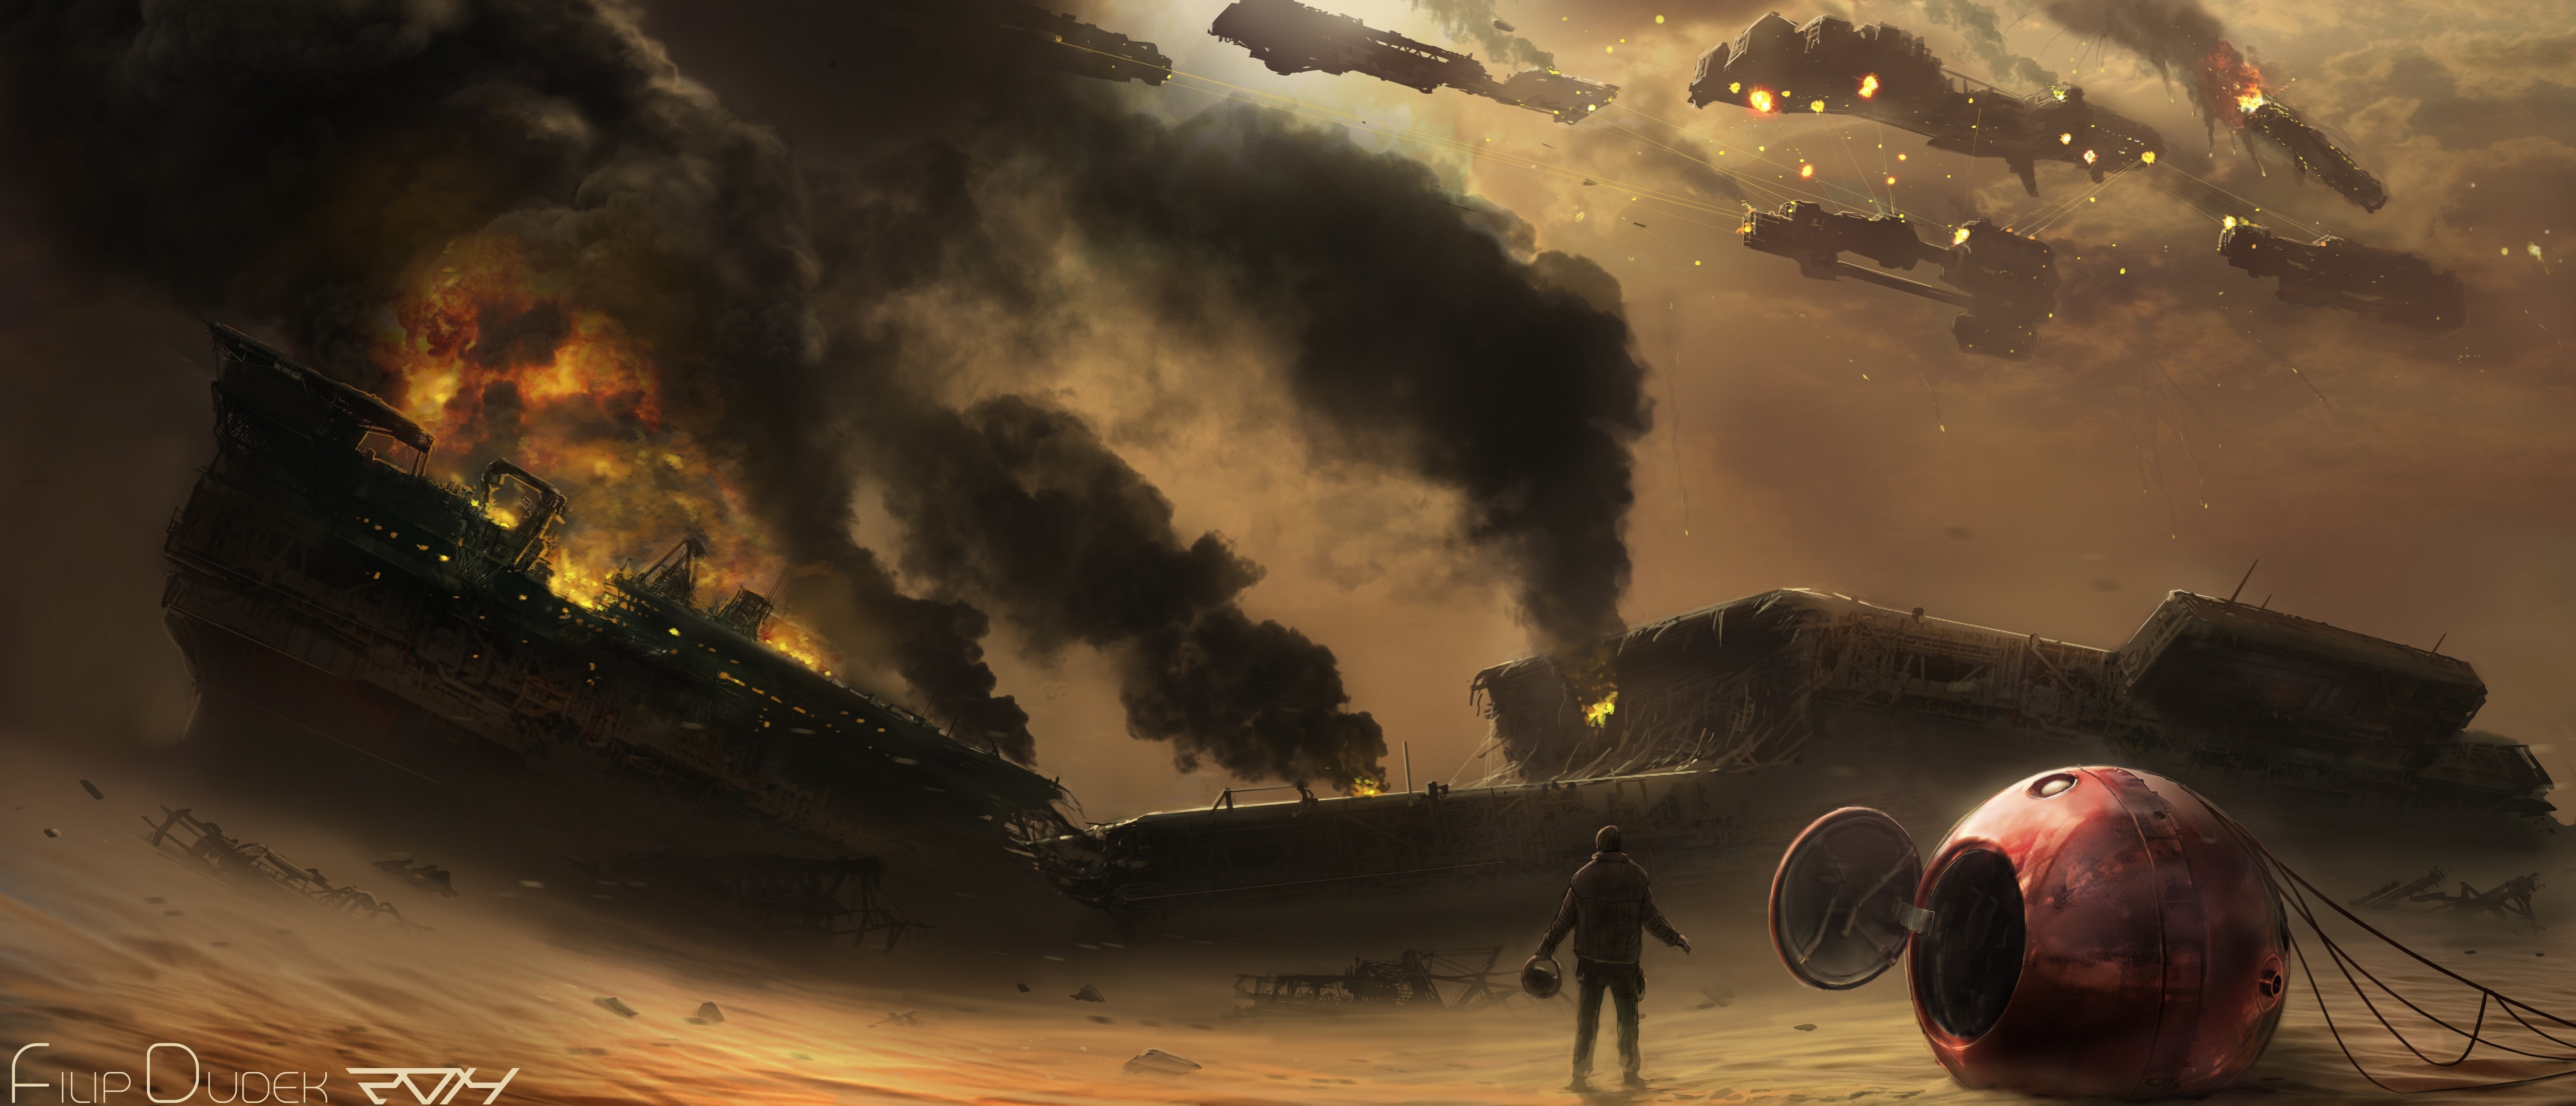 General 5796x2489 futuristic apocalyptic sky fire desert ship digital art watermarked 2014 (Year)